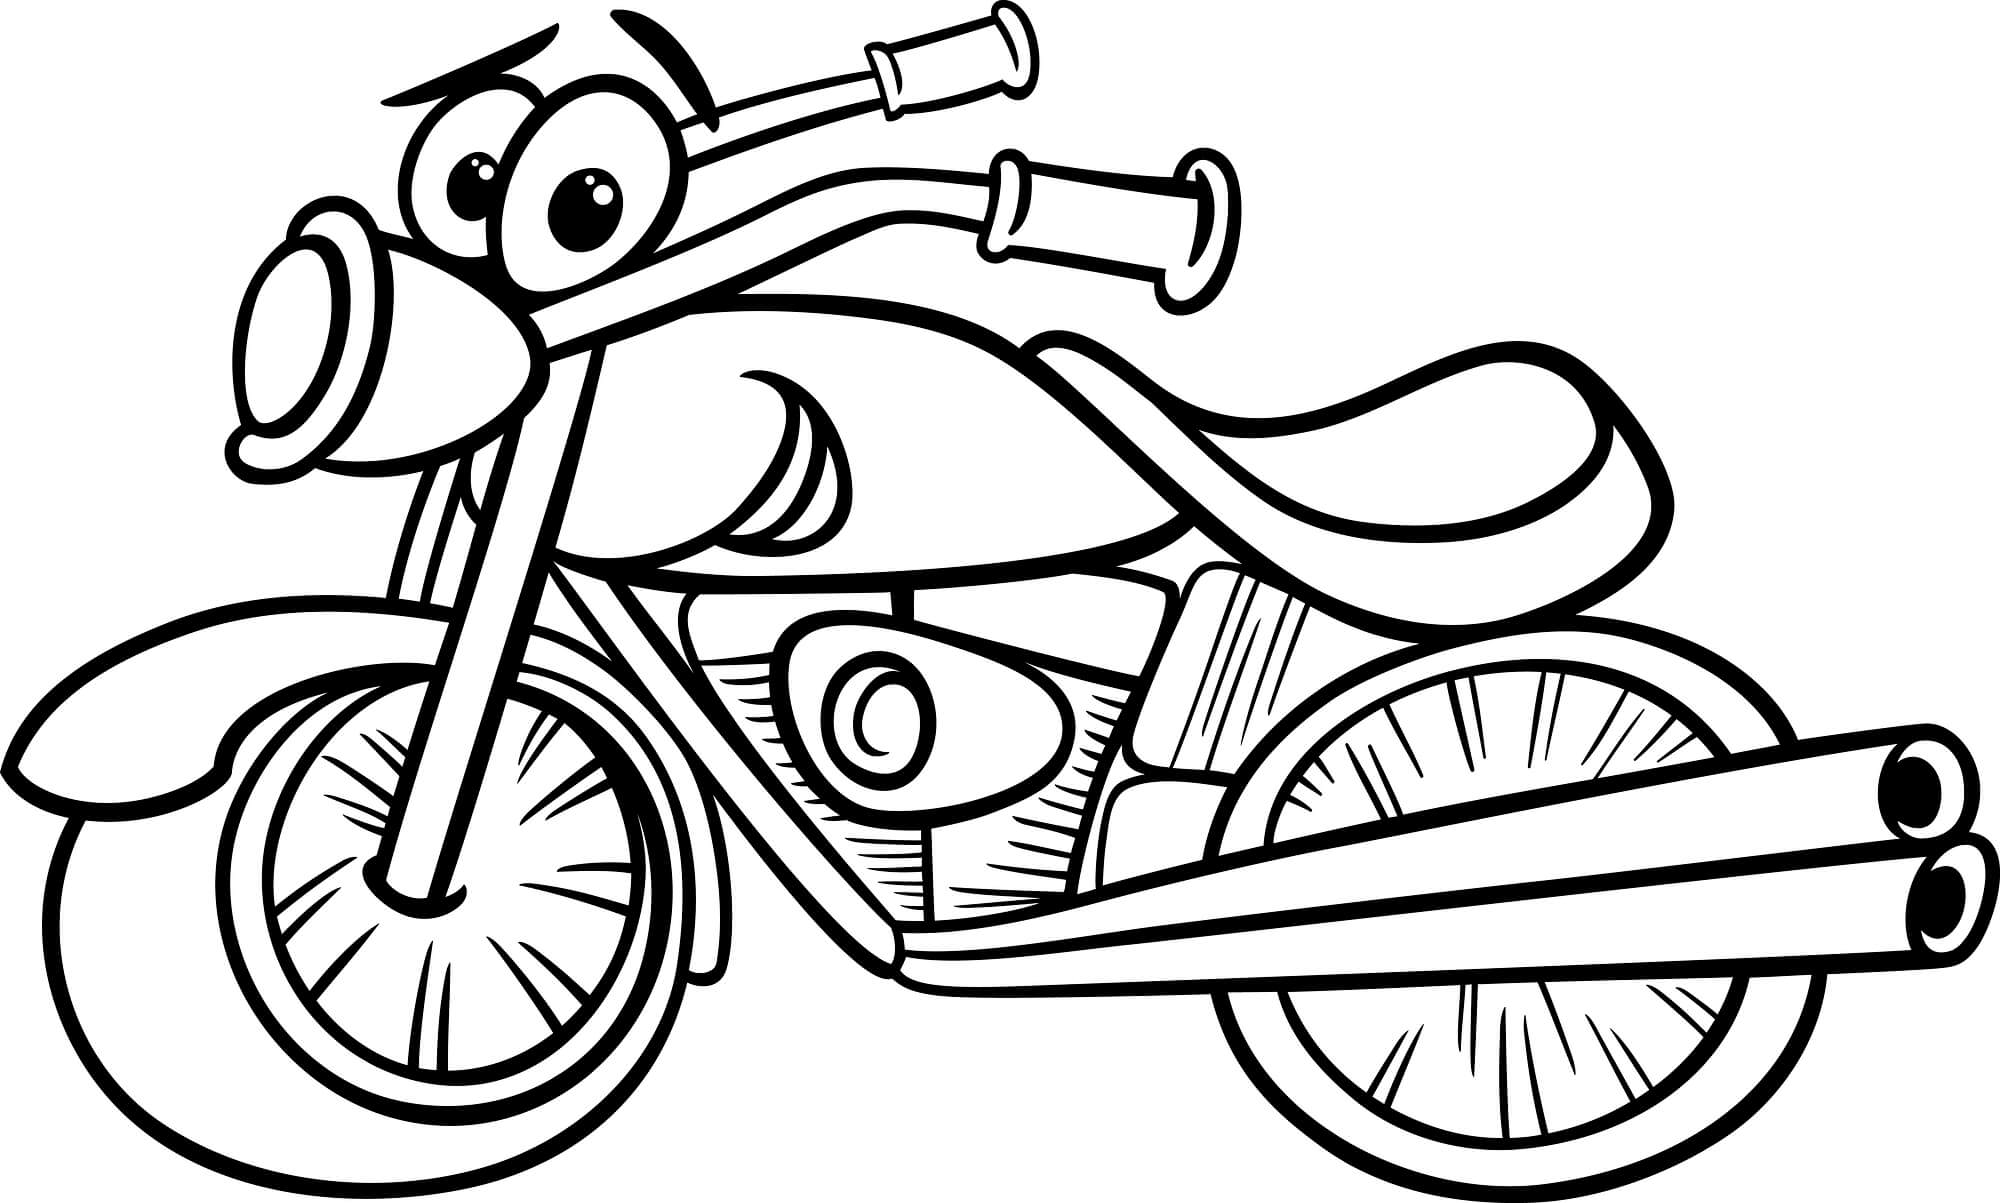 Dibujos de Motocicleta de Dibujos Animados para colorear